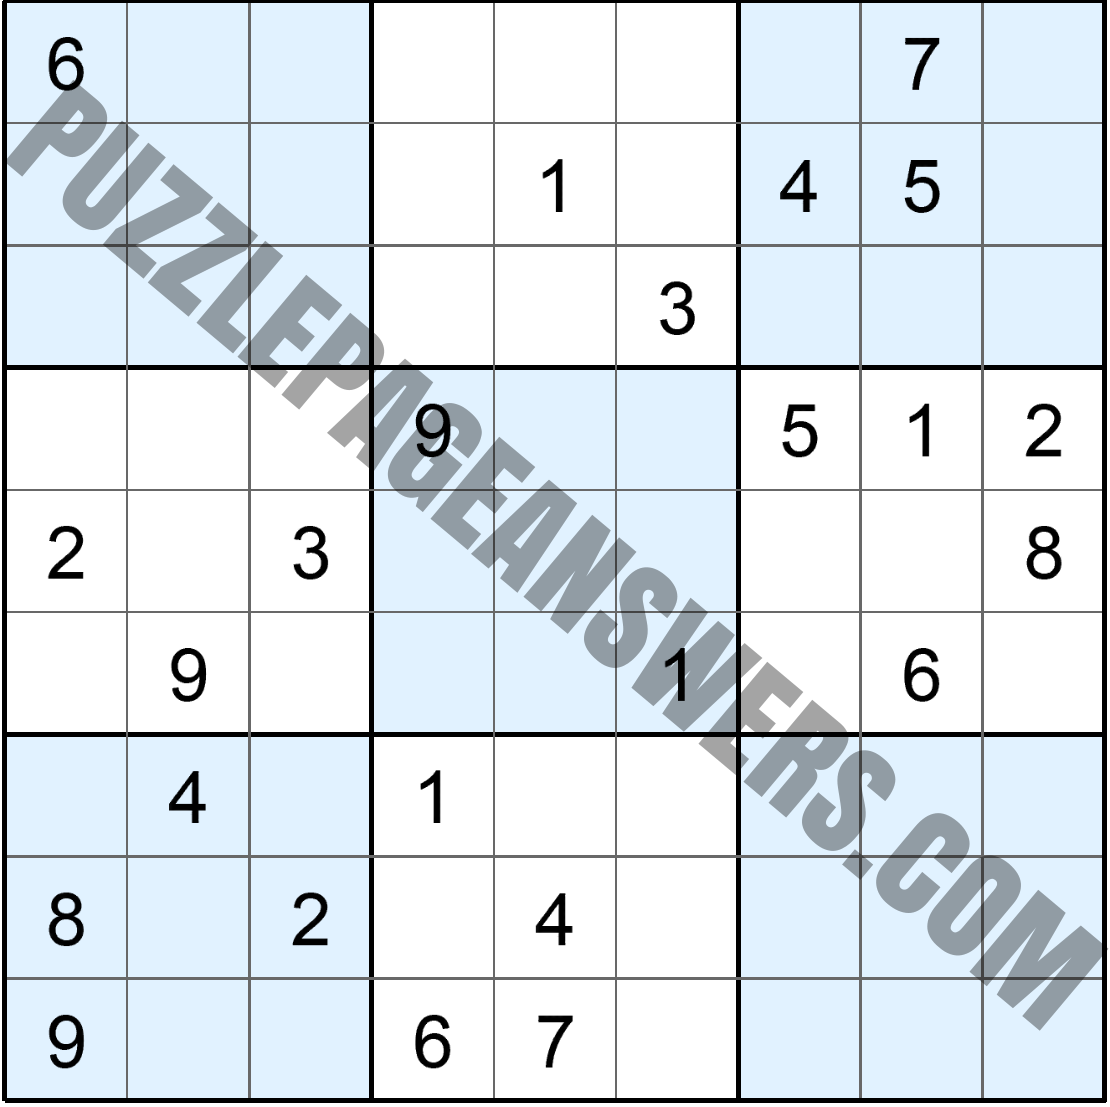 Puzzle Page Sudoku August 13 2020 PuzzlePageAnswers com